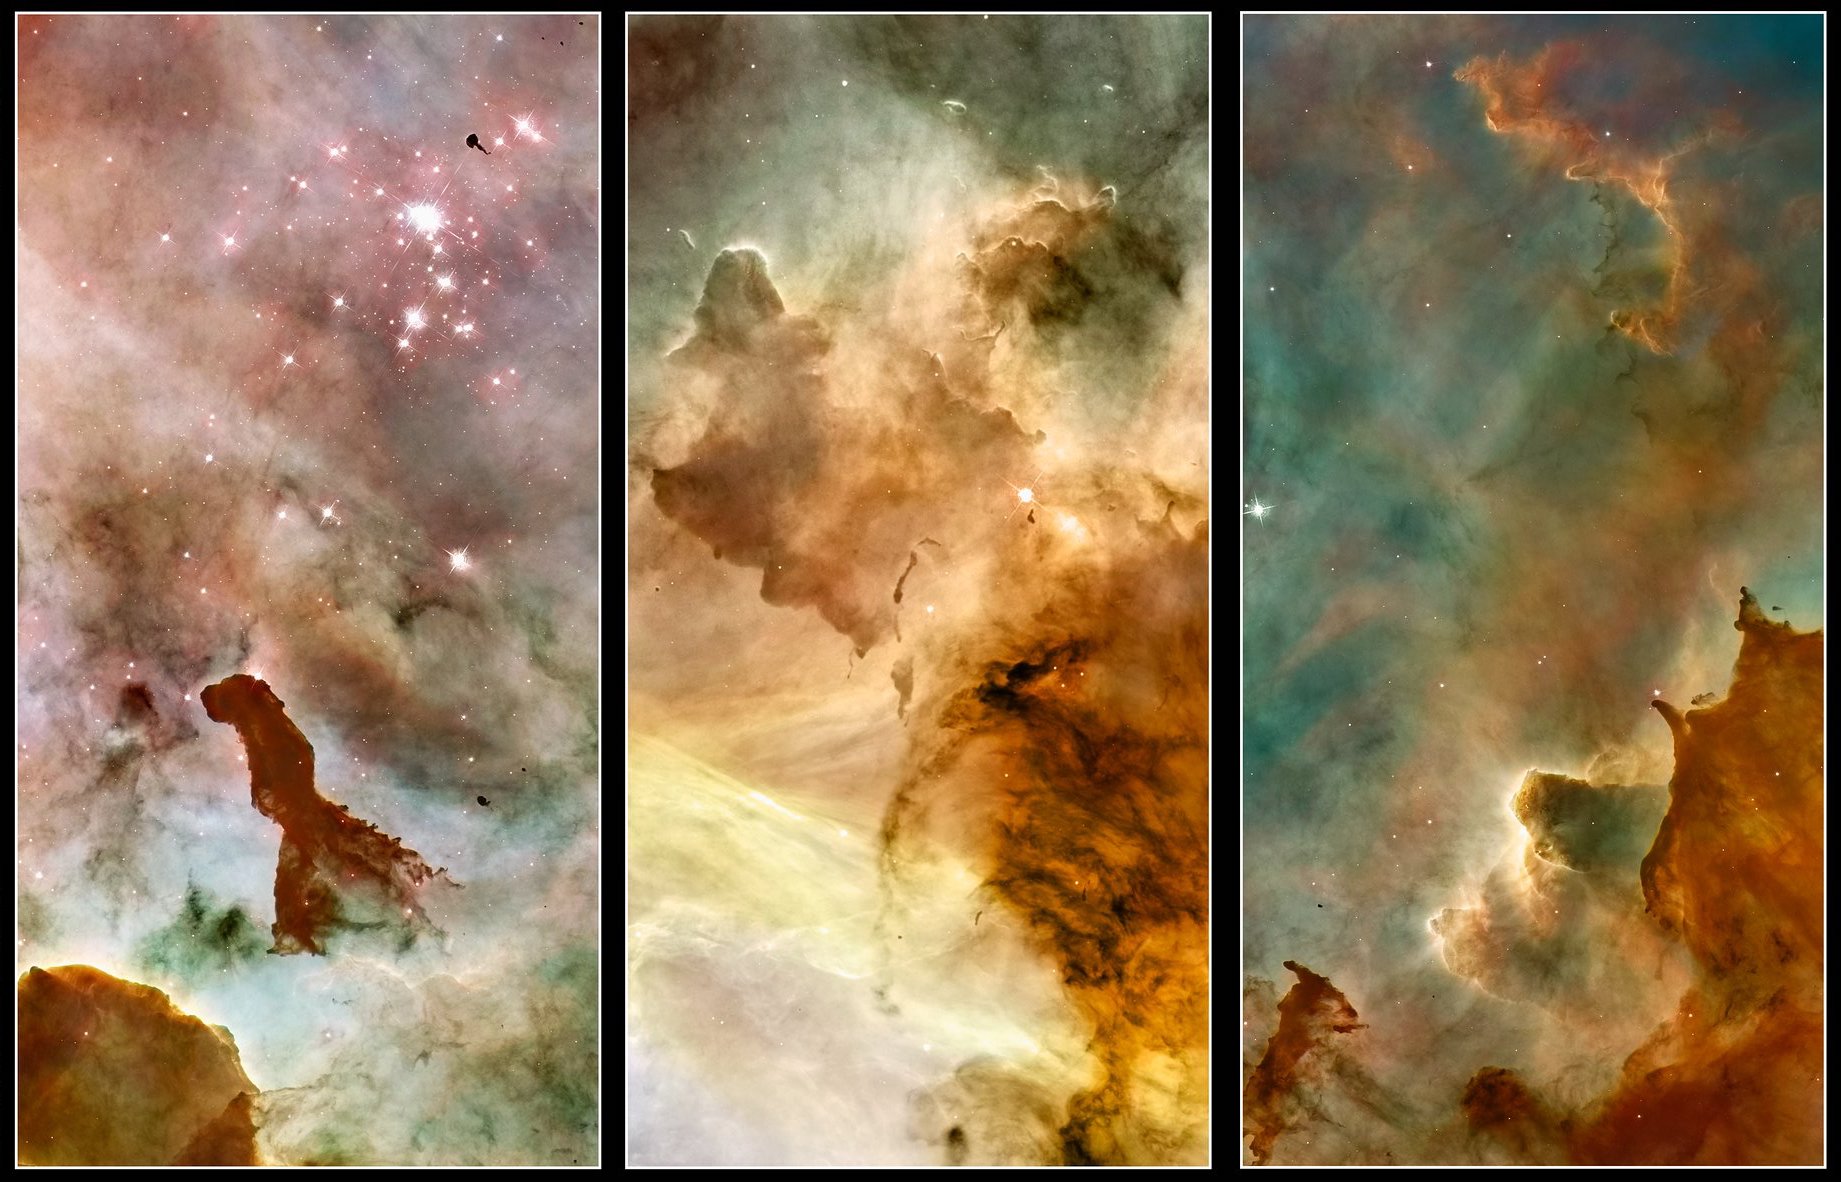 hubble image of carina nebula